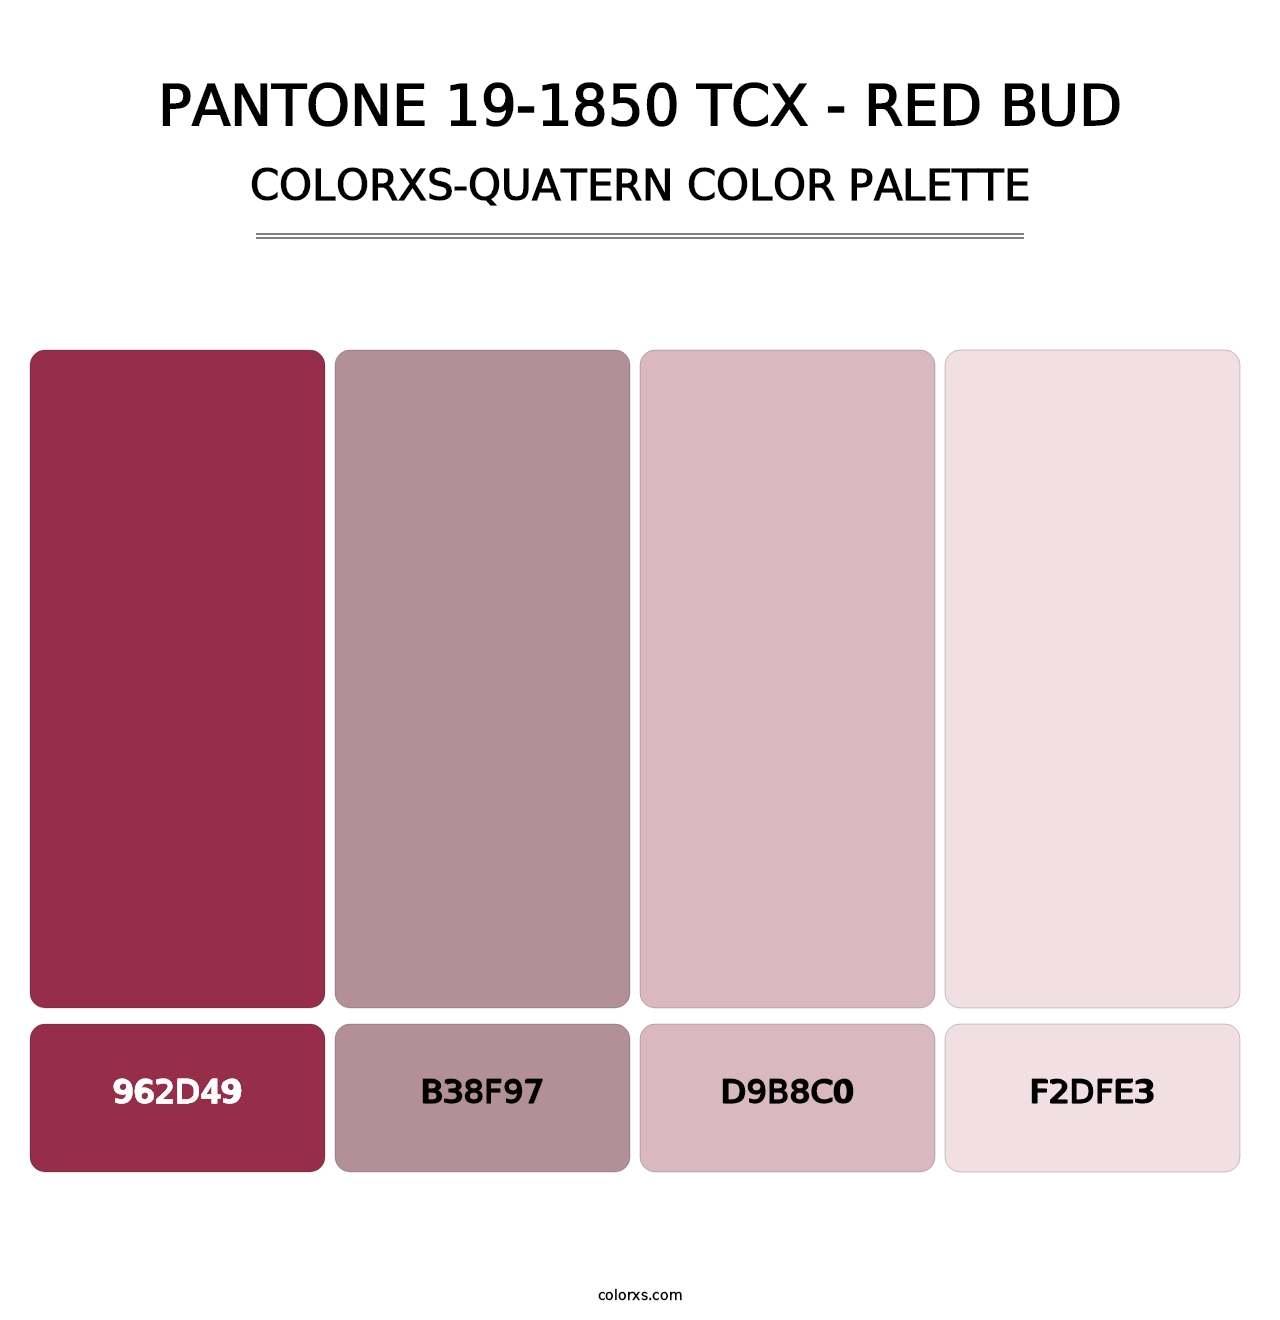 PANTONE 19-1850 TCX - Red Bud - Colorxs Quatern Palette